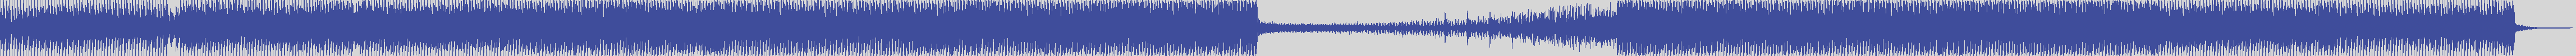 vitti_records [VIT012] Aware Project - Xian [Original Mix] audio wave form